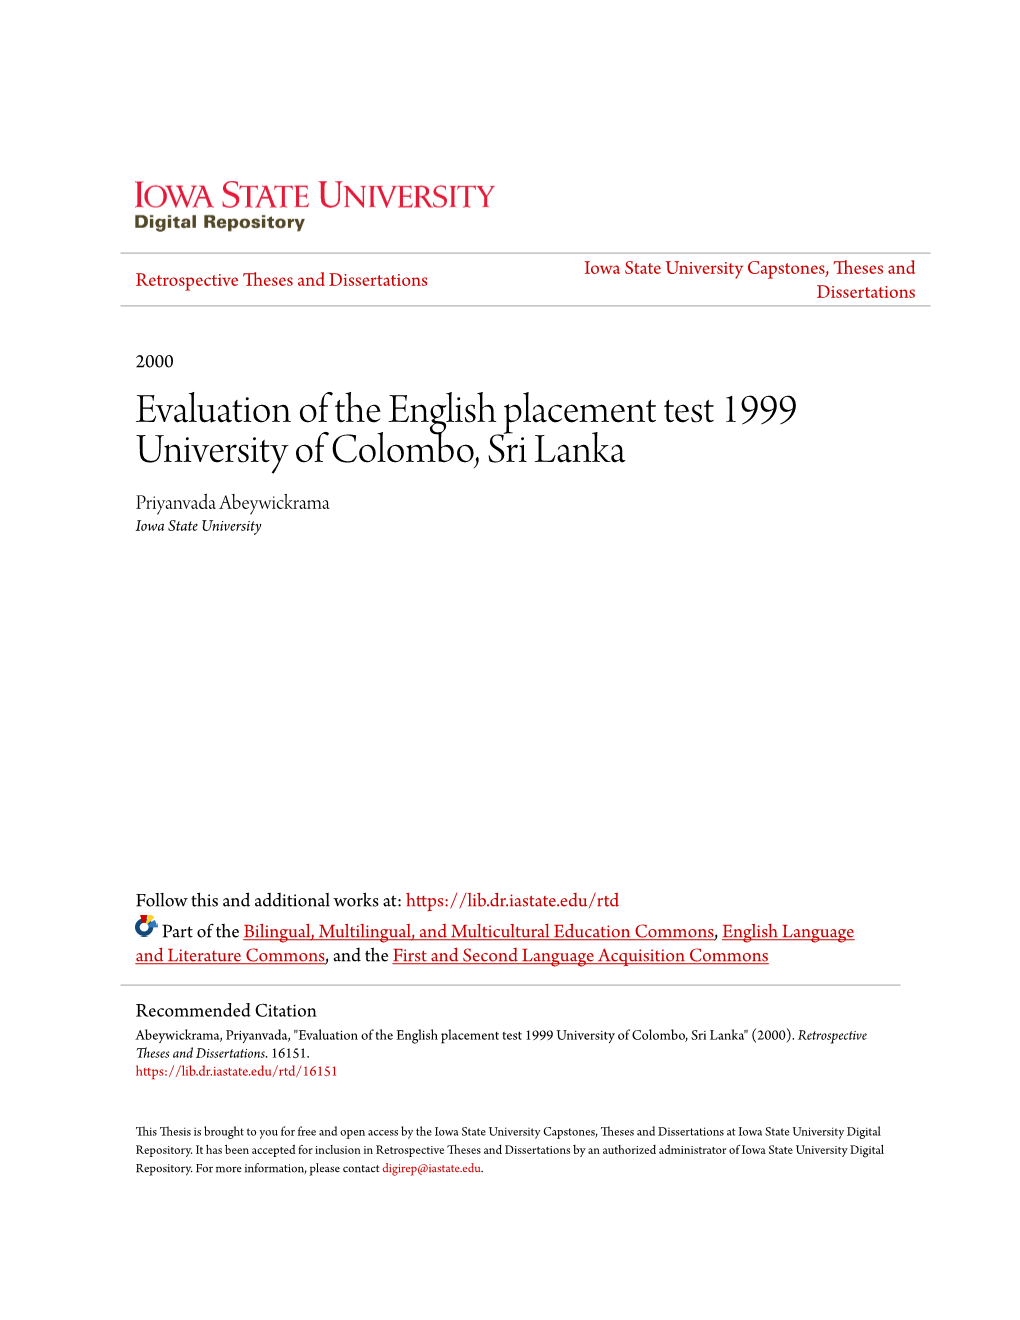 Evaluation of the English Placement Test 1999 University of Colombo, Sri Lanka Priyanvada Abeywickrama Iowa State University